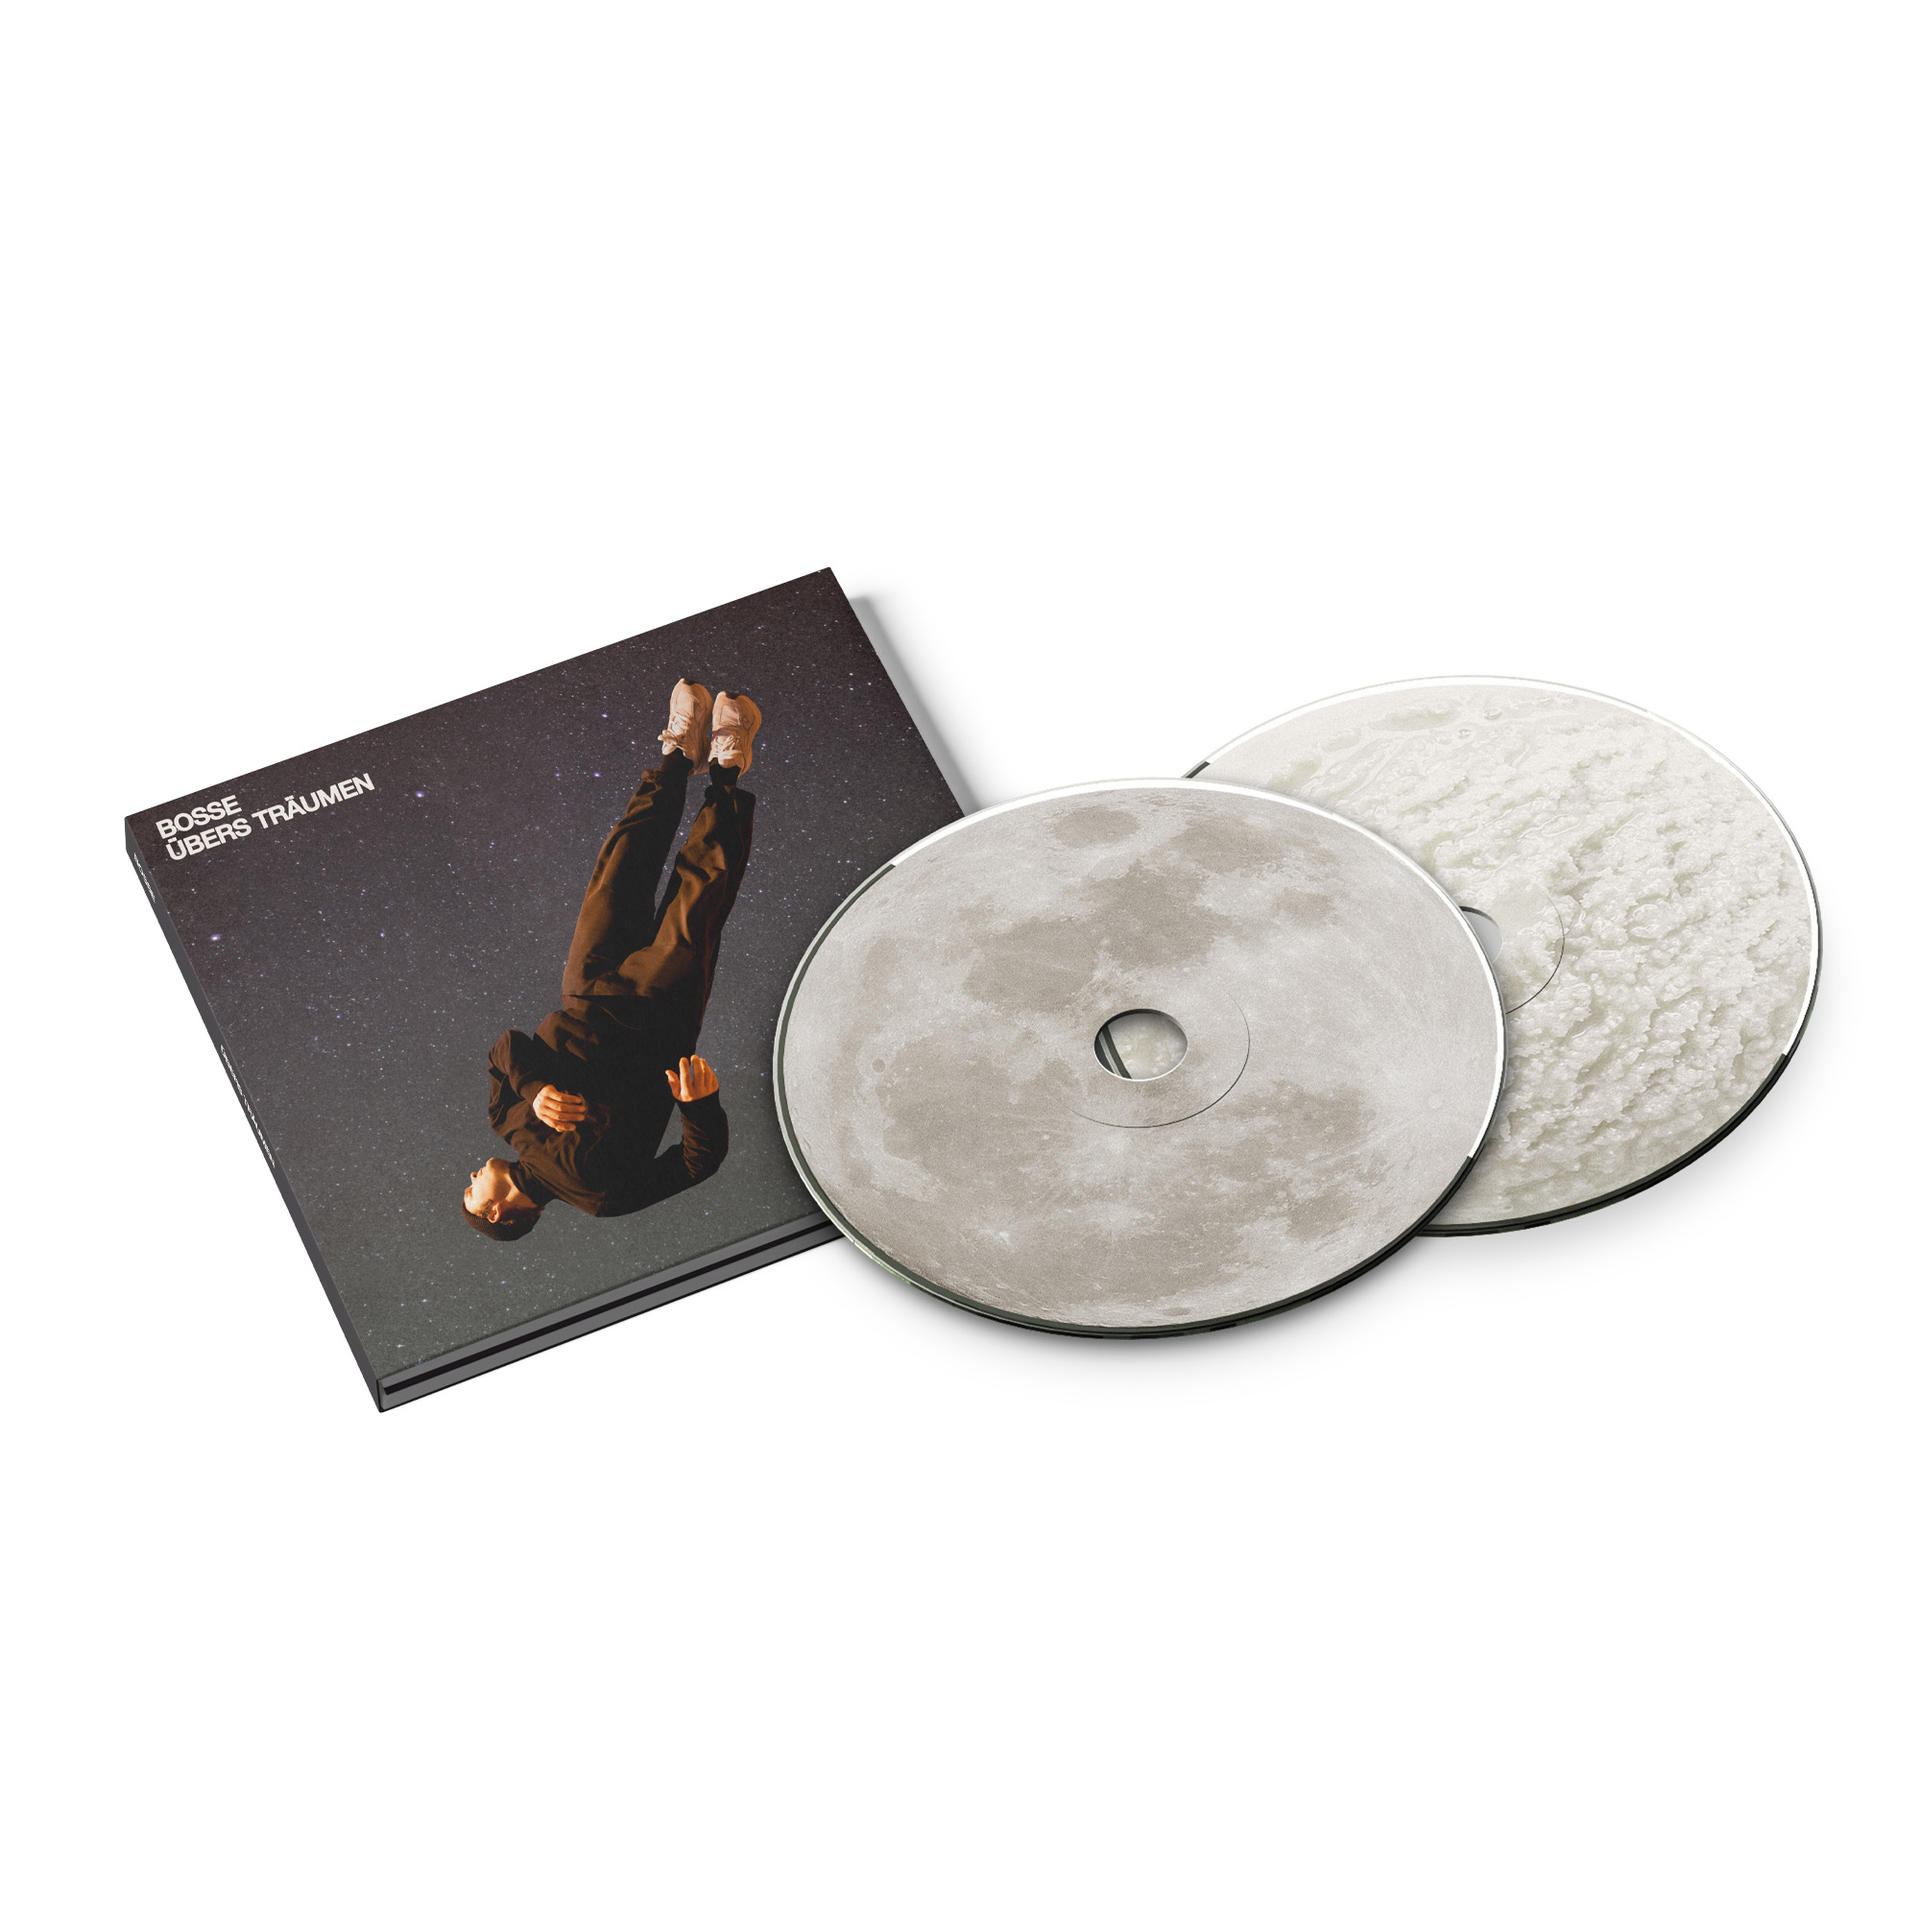 Bosse - Übers - Edition) (Ltd.Deluxe (CD) Träumen